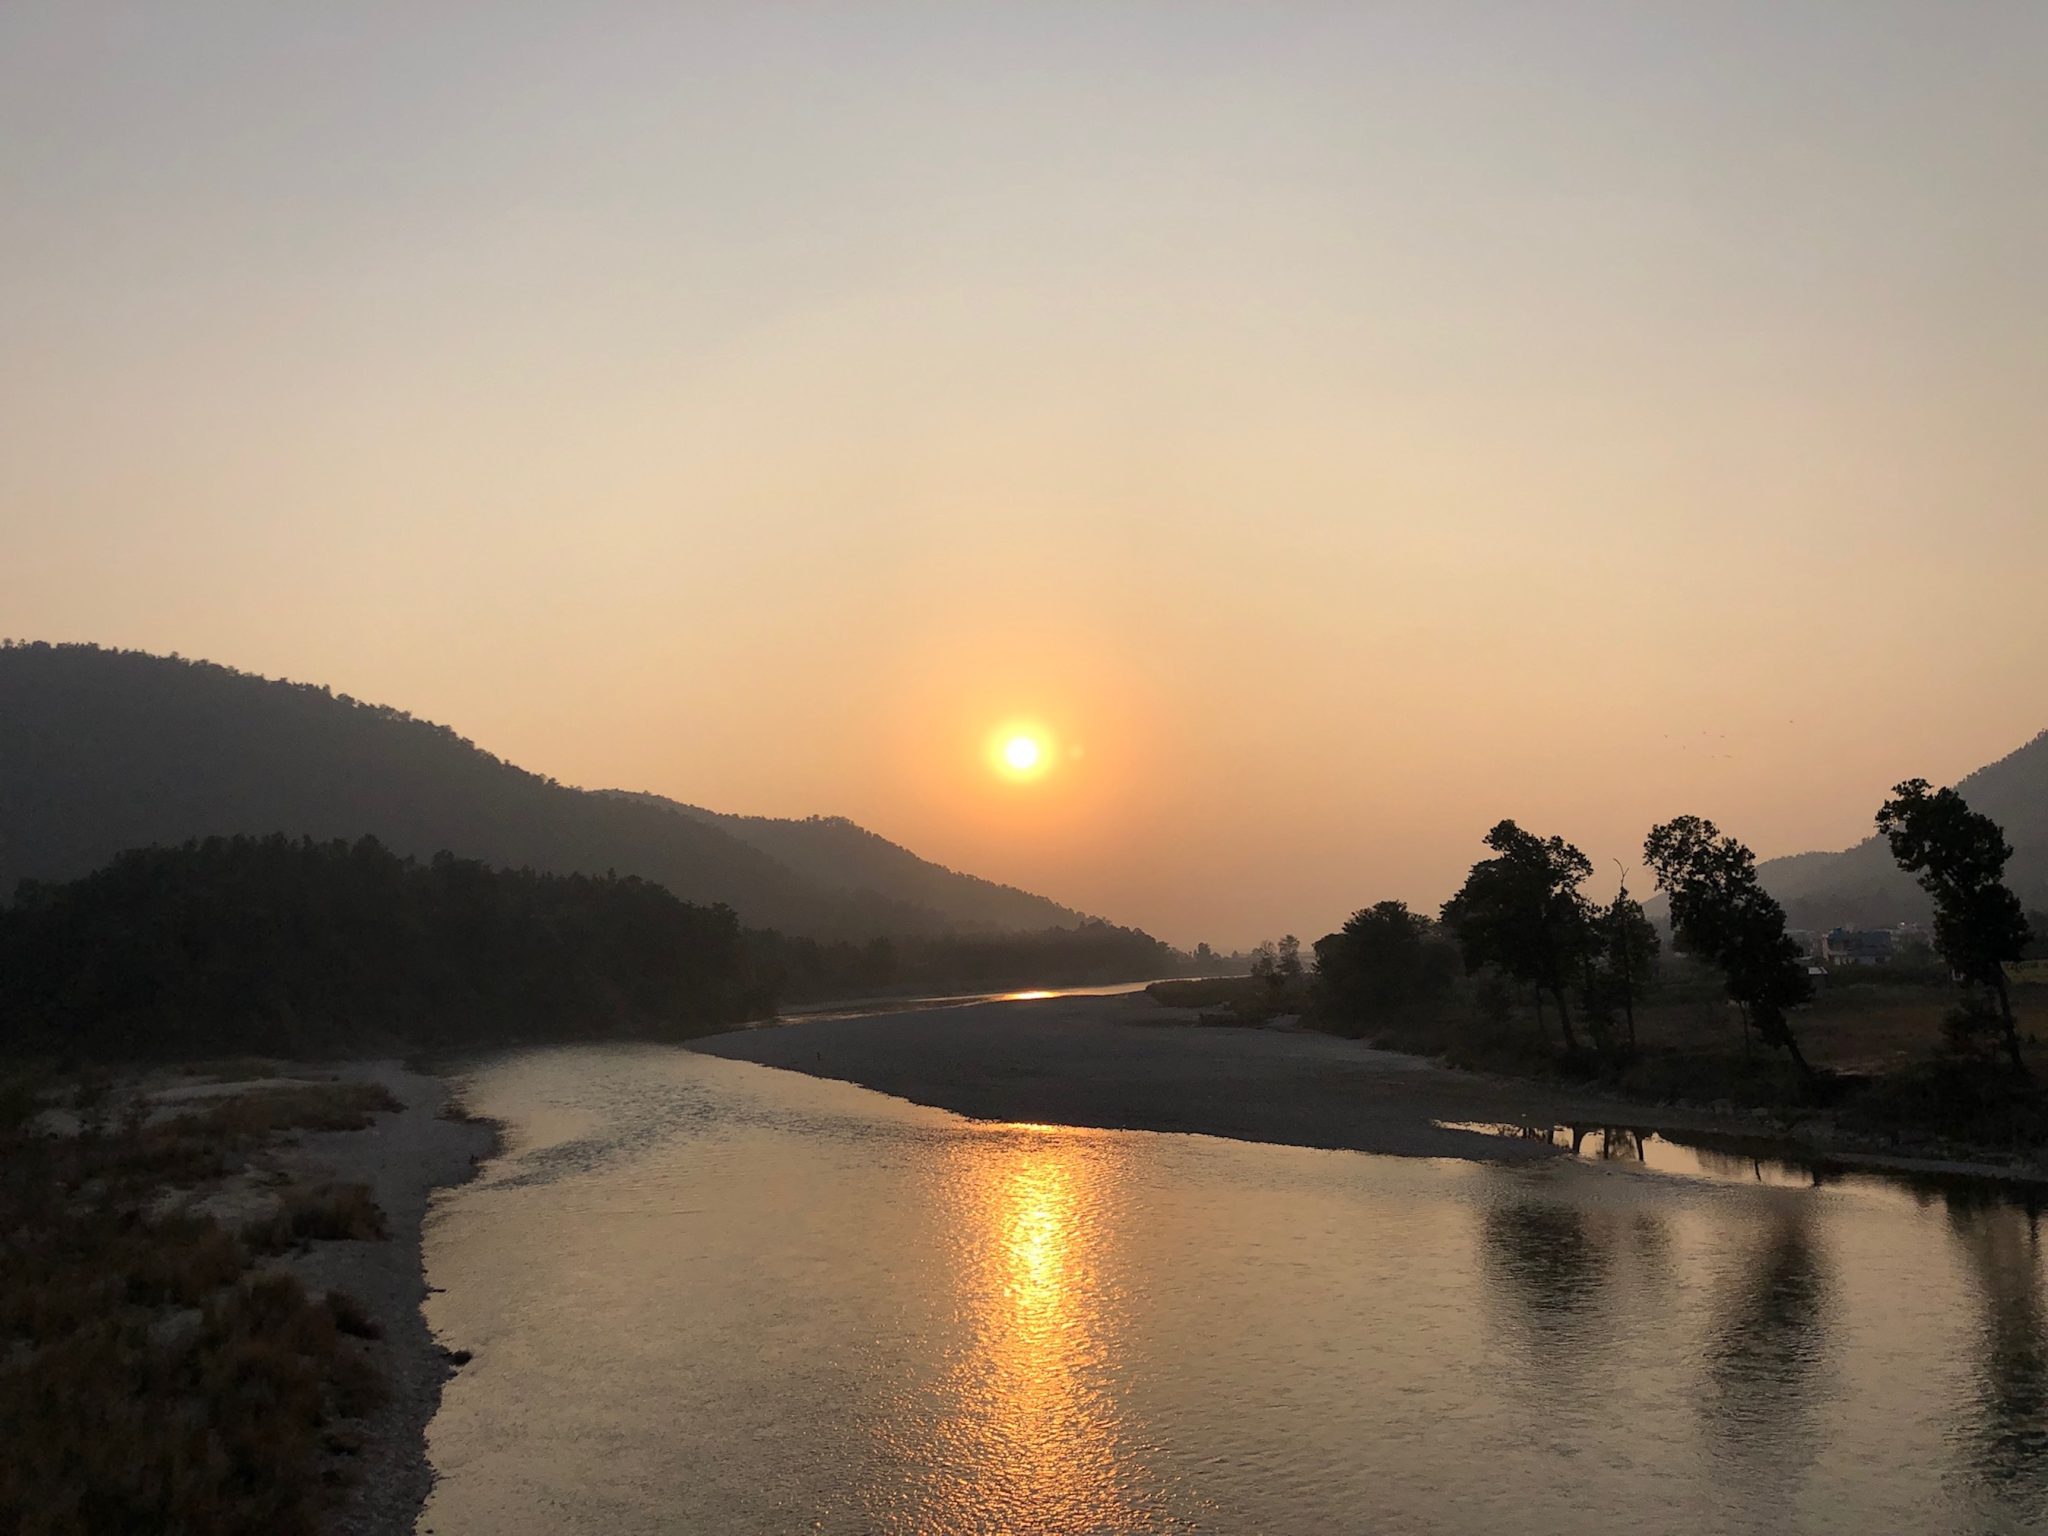 Evening sunset at Rapti river, western Nepal